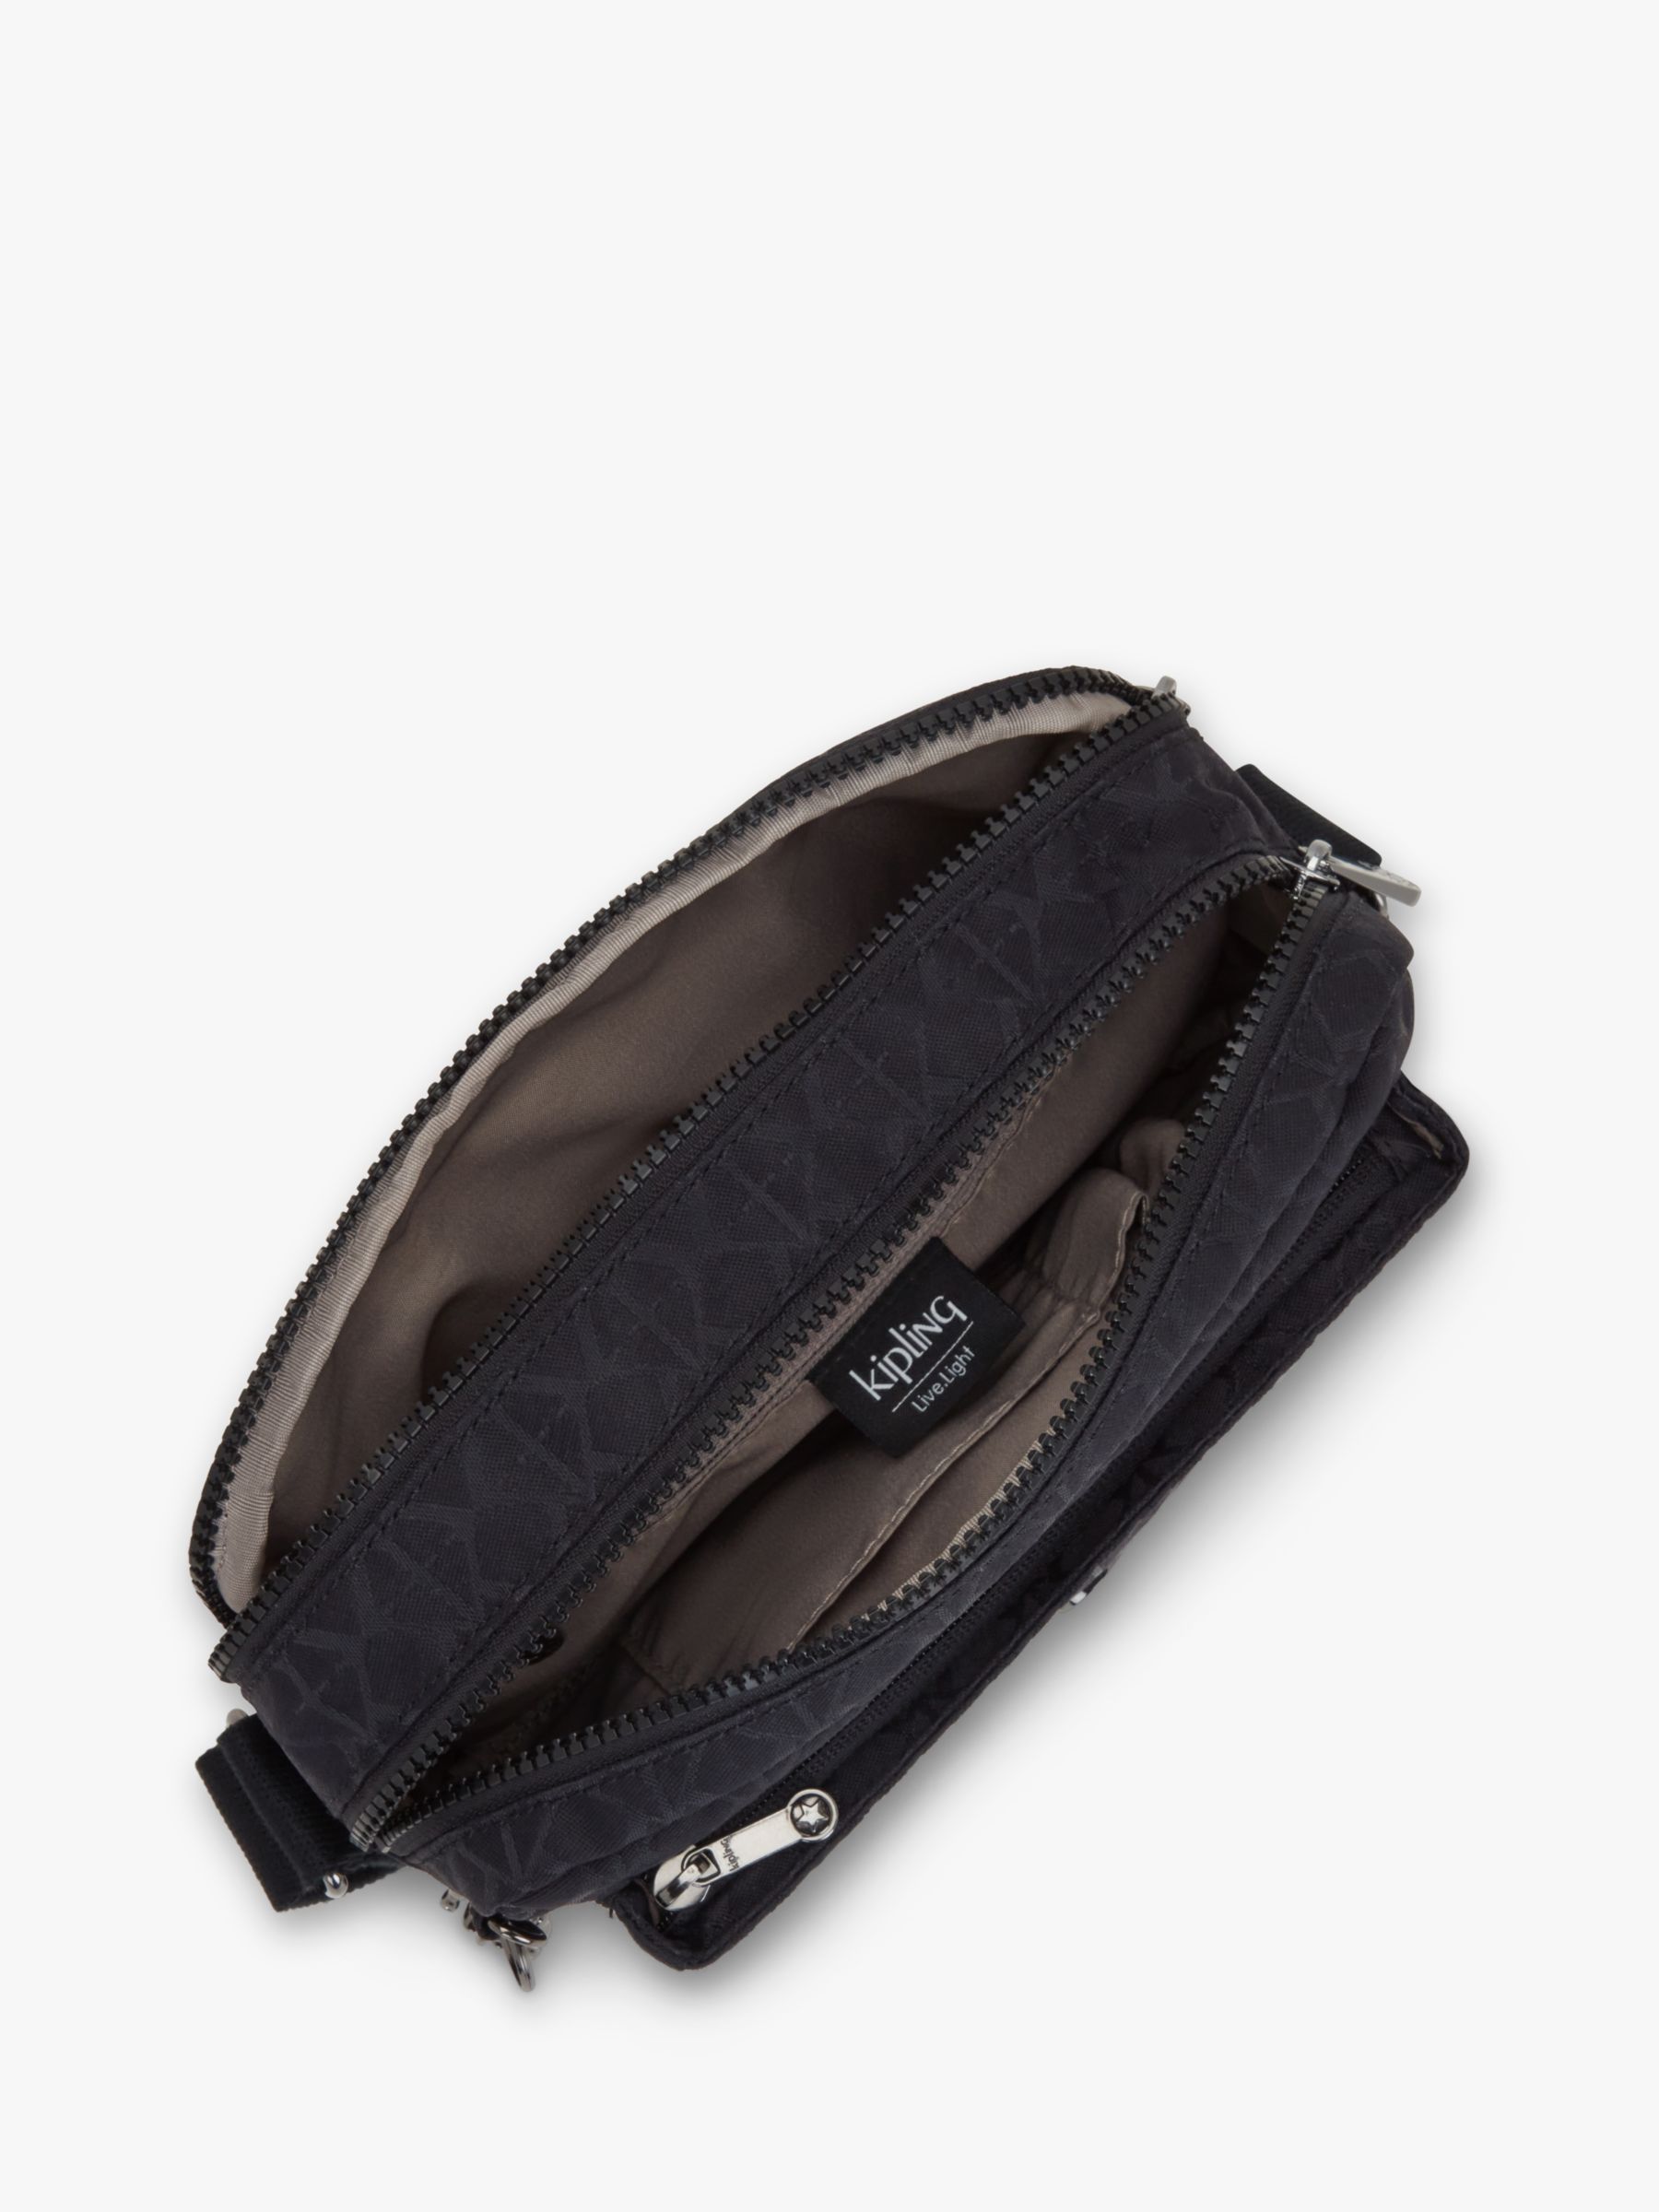 Kipling Abanu Medium Cross Body Bag, Black at John Lewis & Partners